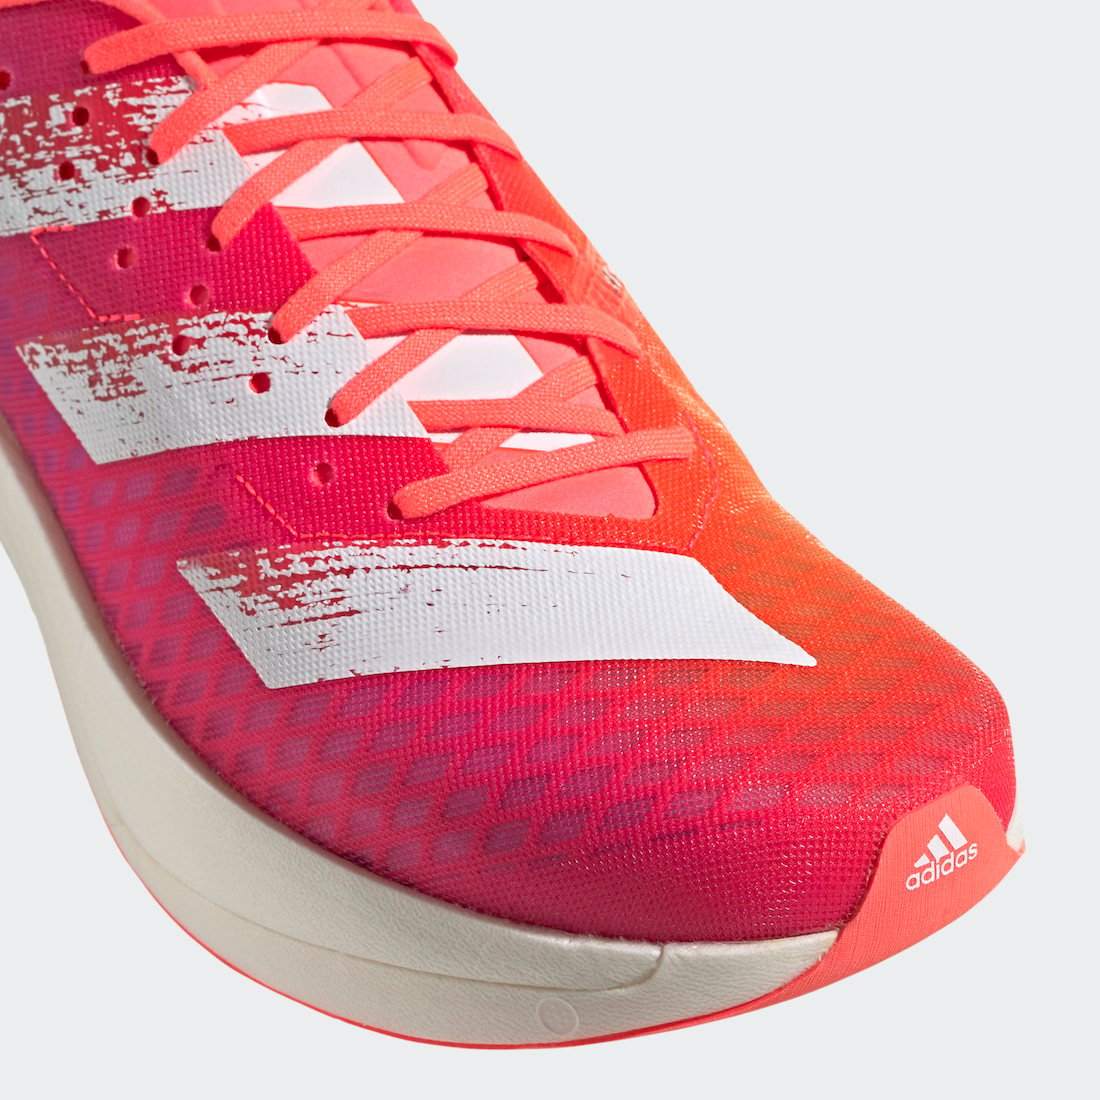 adidas Adizero Adios Pro Signal Pink Shock Pink G55661 Release Date Info